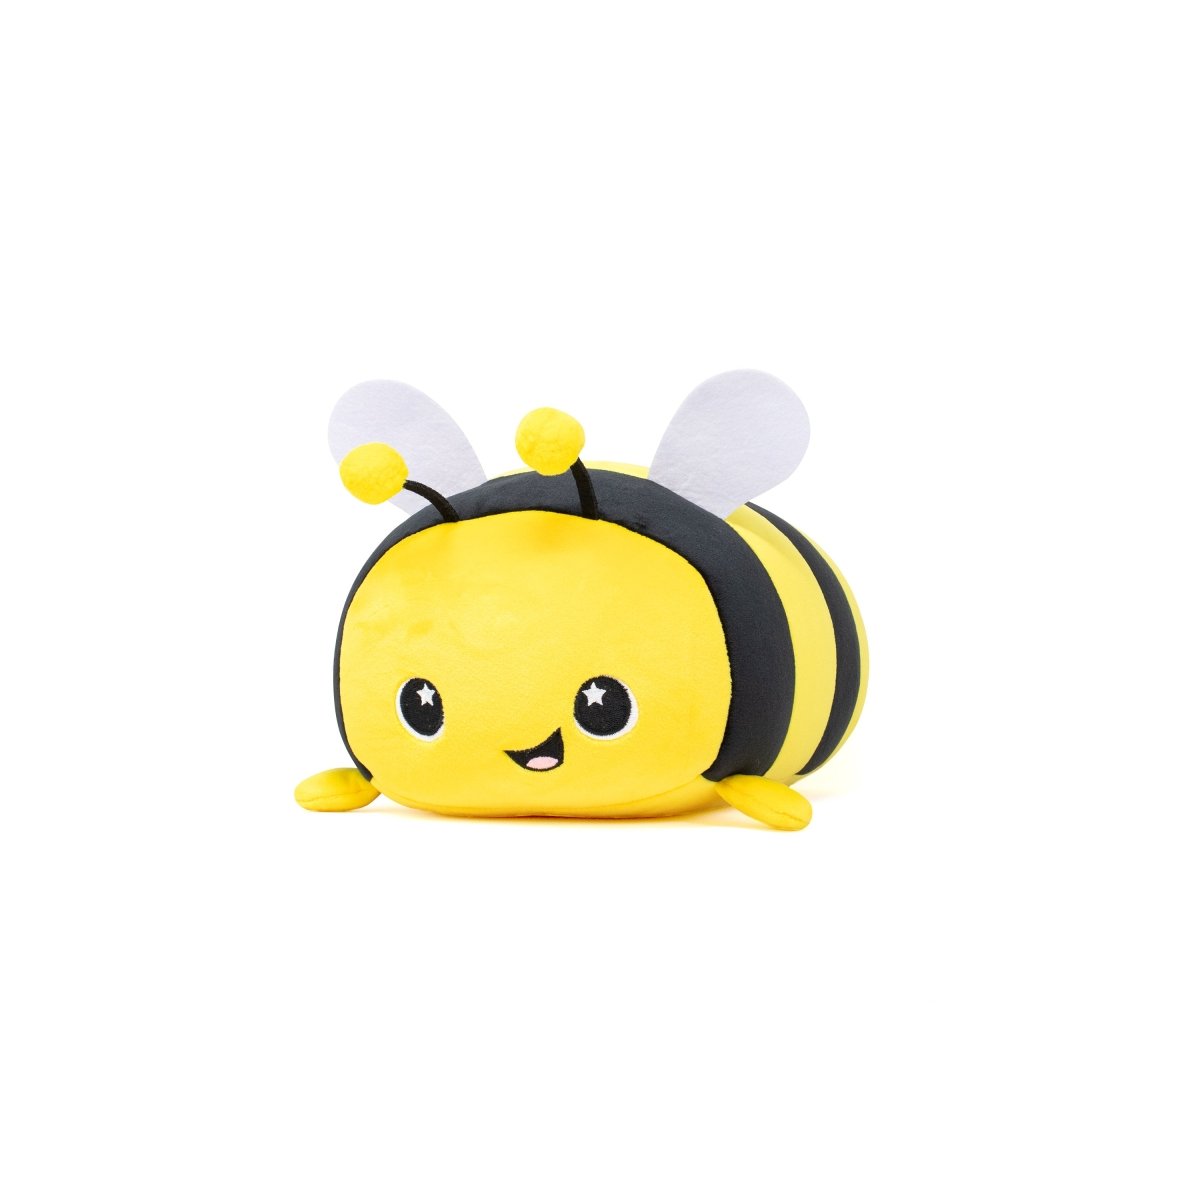 Vee the Bee 2-In-1 Travel Pillow